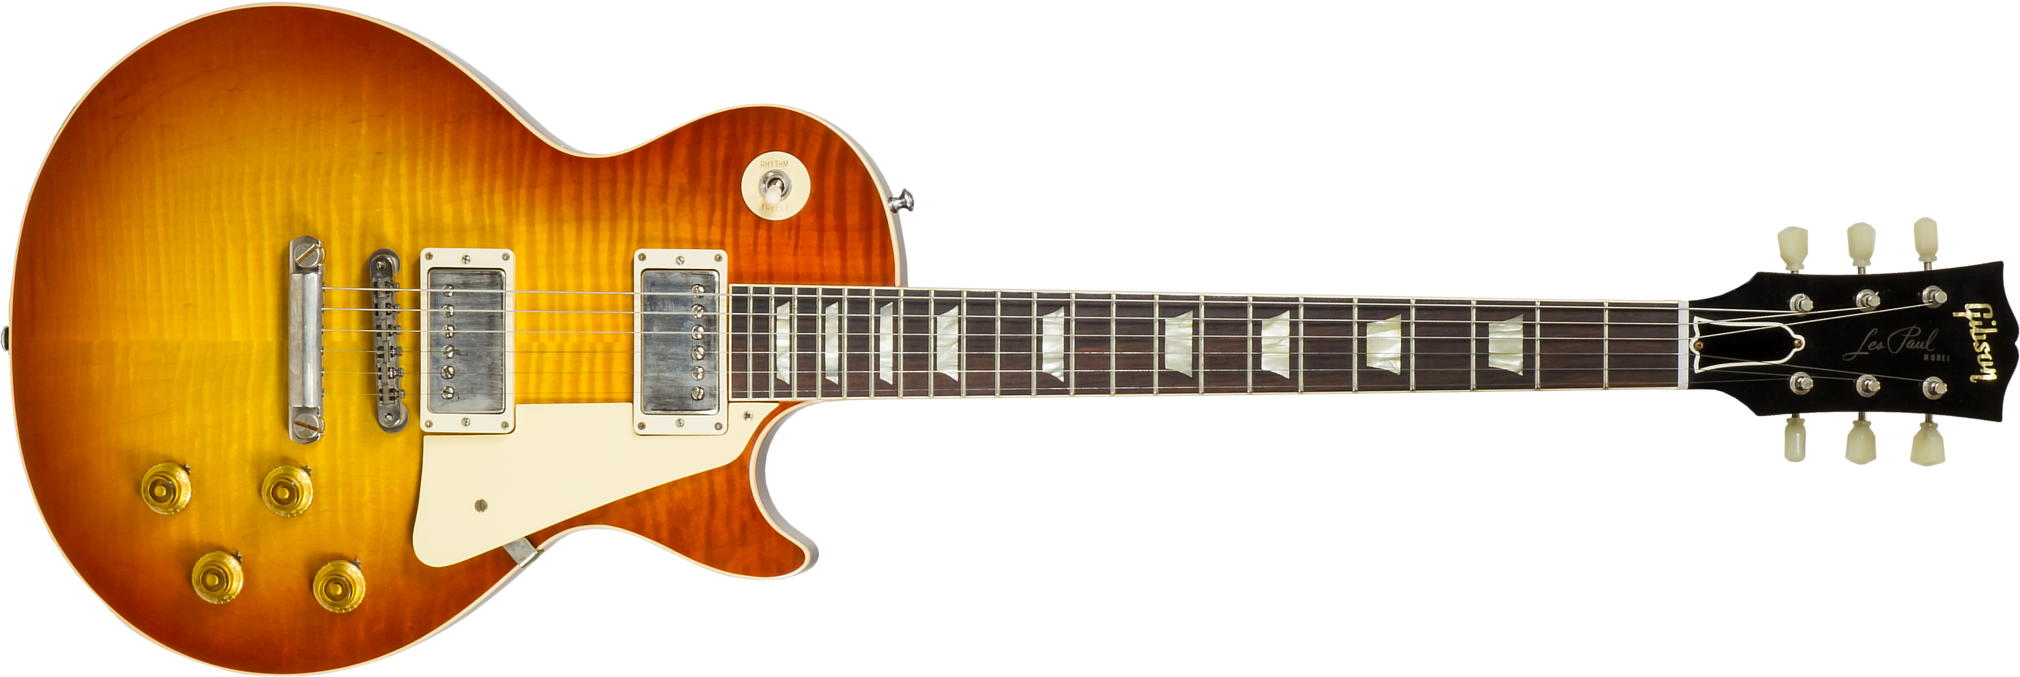 Gibson Custom Shop Les Paul Standard 1960 V1 60th Anniversary #001496 - Vos Antiquity Burst - Single cut electric guitar - Main picture